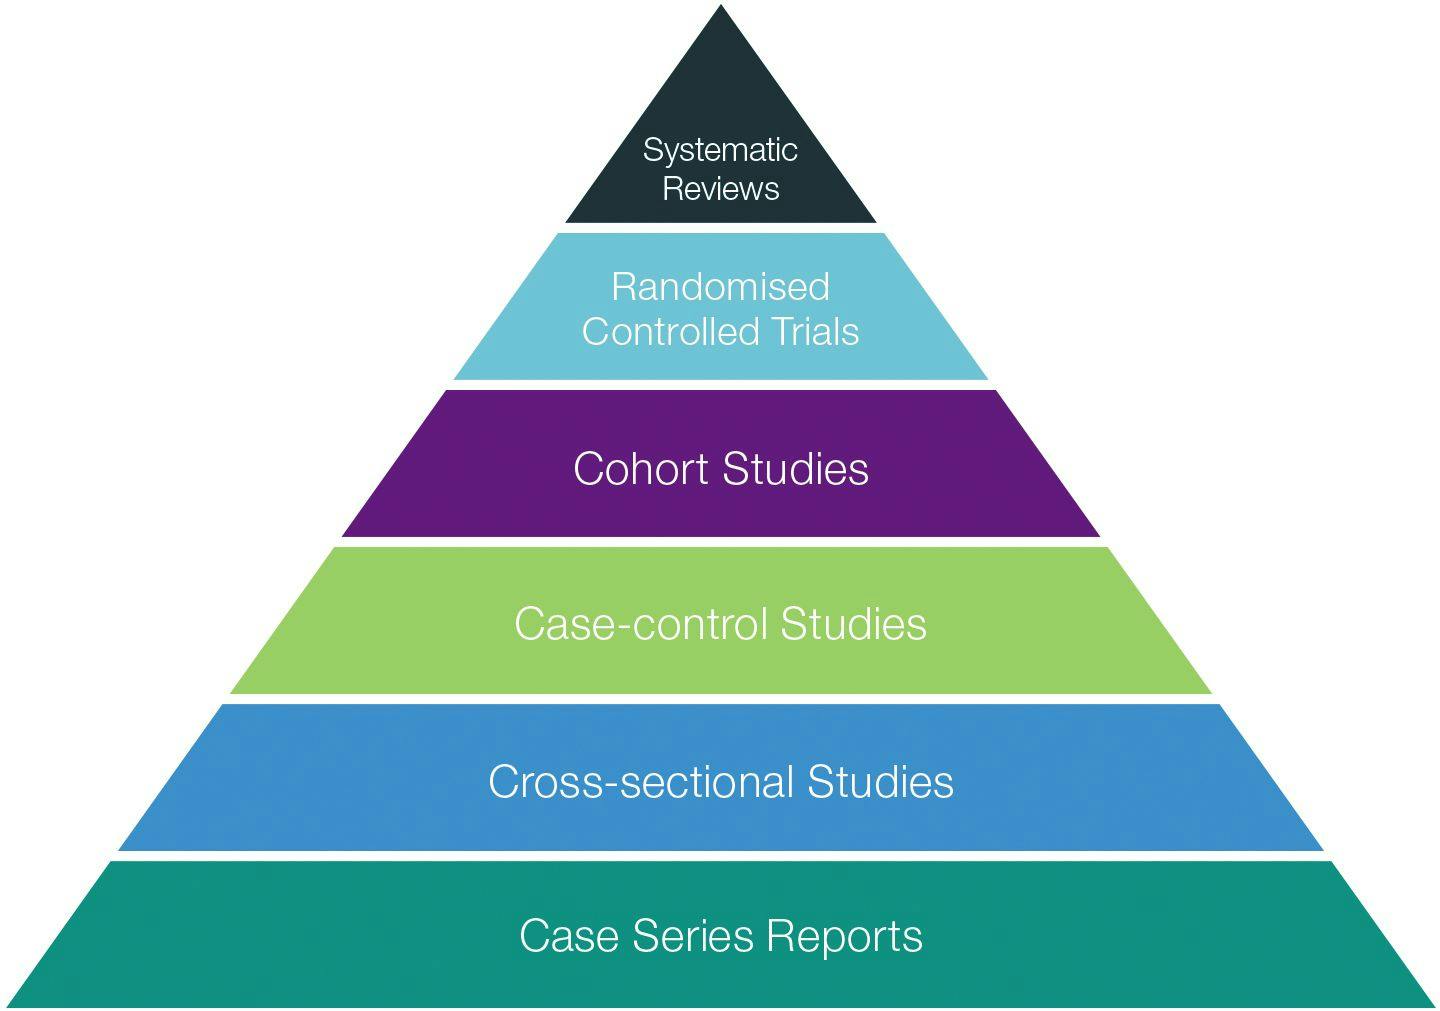 ICON_Epidemiology_Figure 1_Pyramid_CMYK.jpg